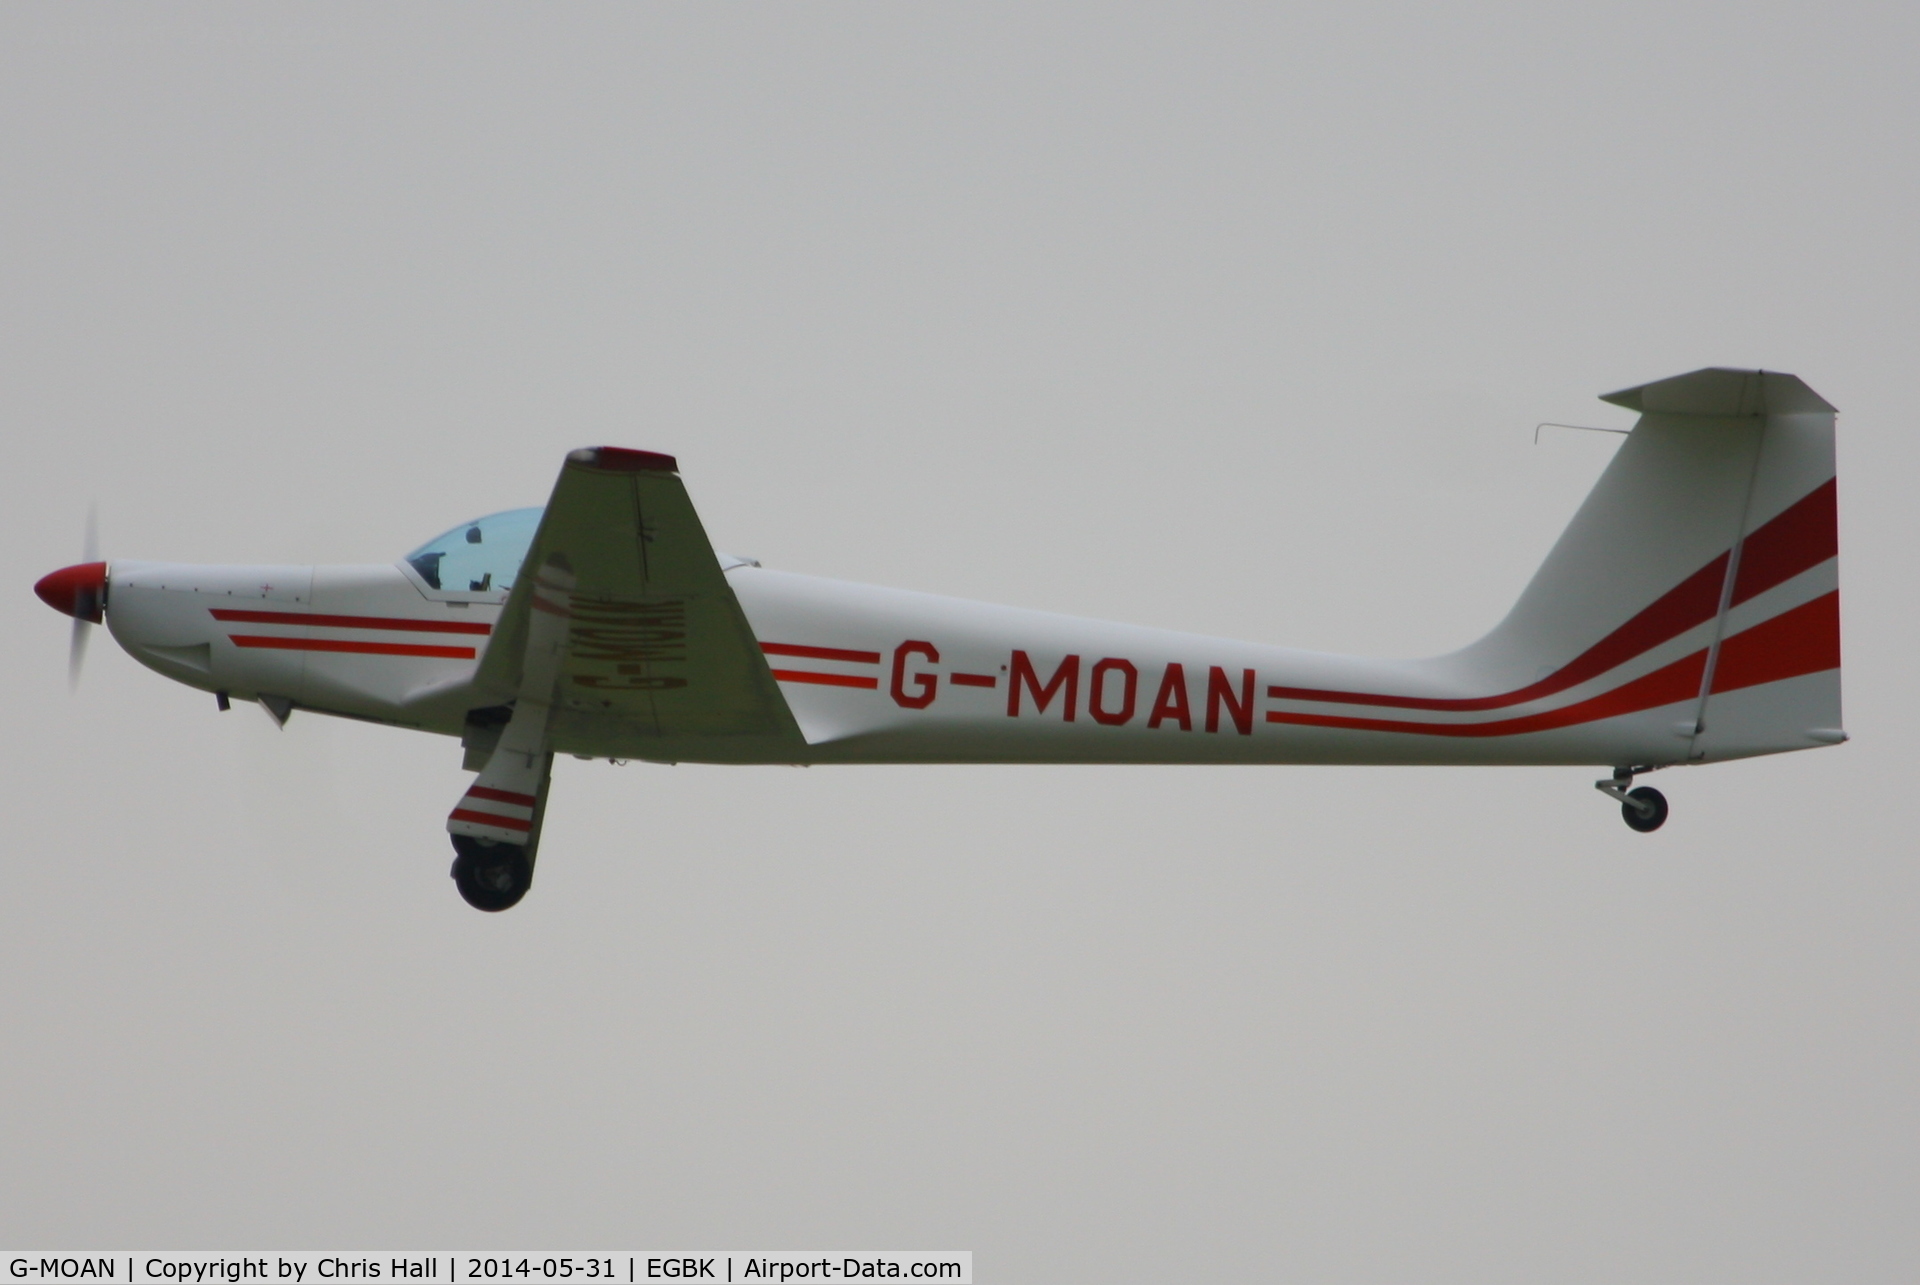 G-MOAN, 2004 Aeromot AMT-200S Super Ximango C/N 200.133, at AeroExpo 2014